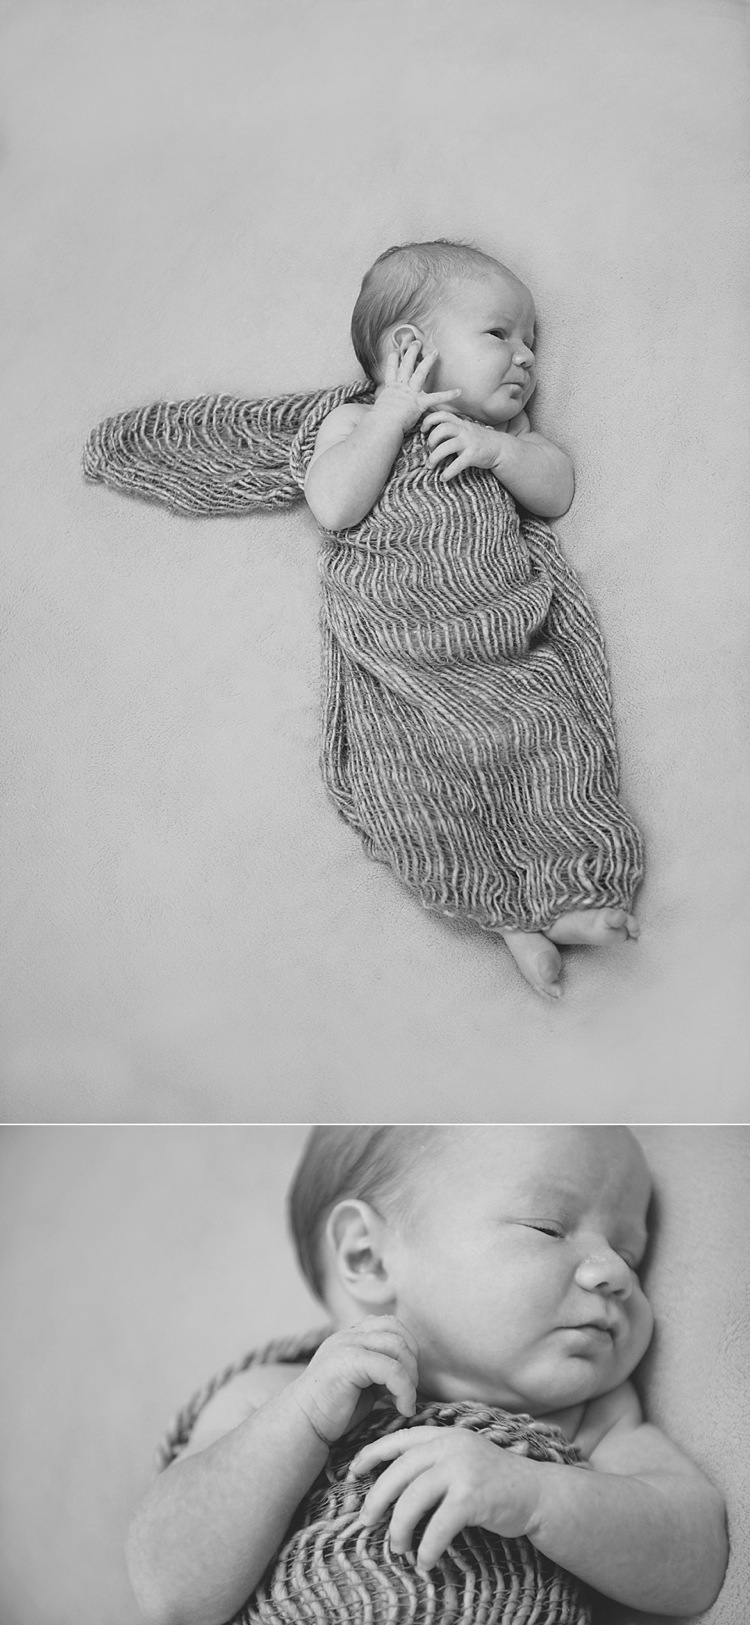 natural newborn baby boy 10 days old london lily sawyer photo